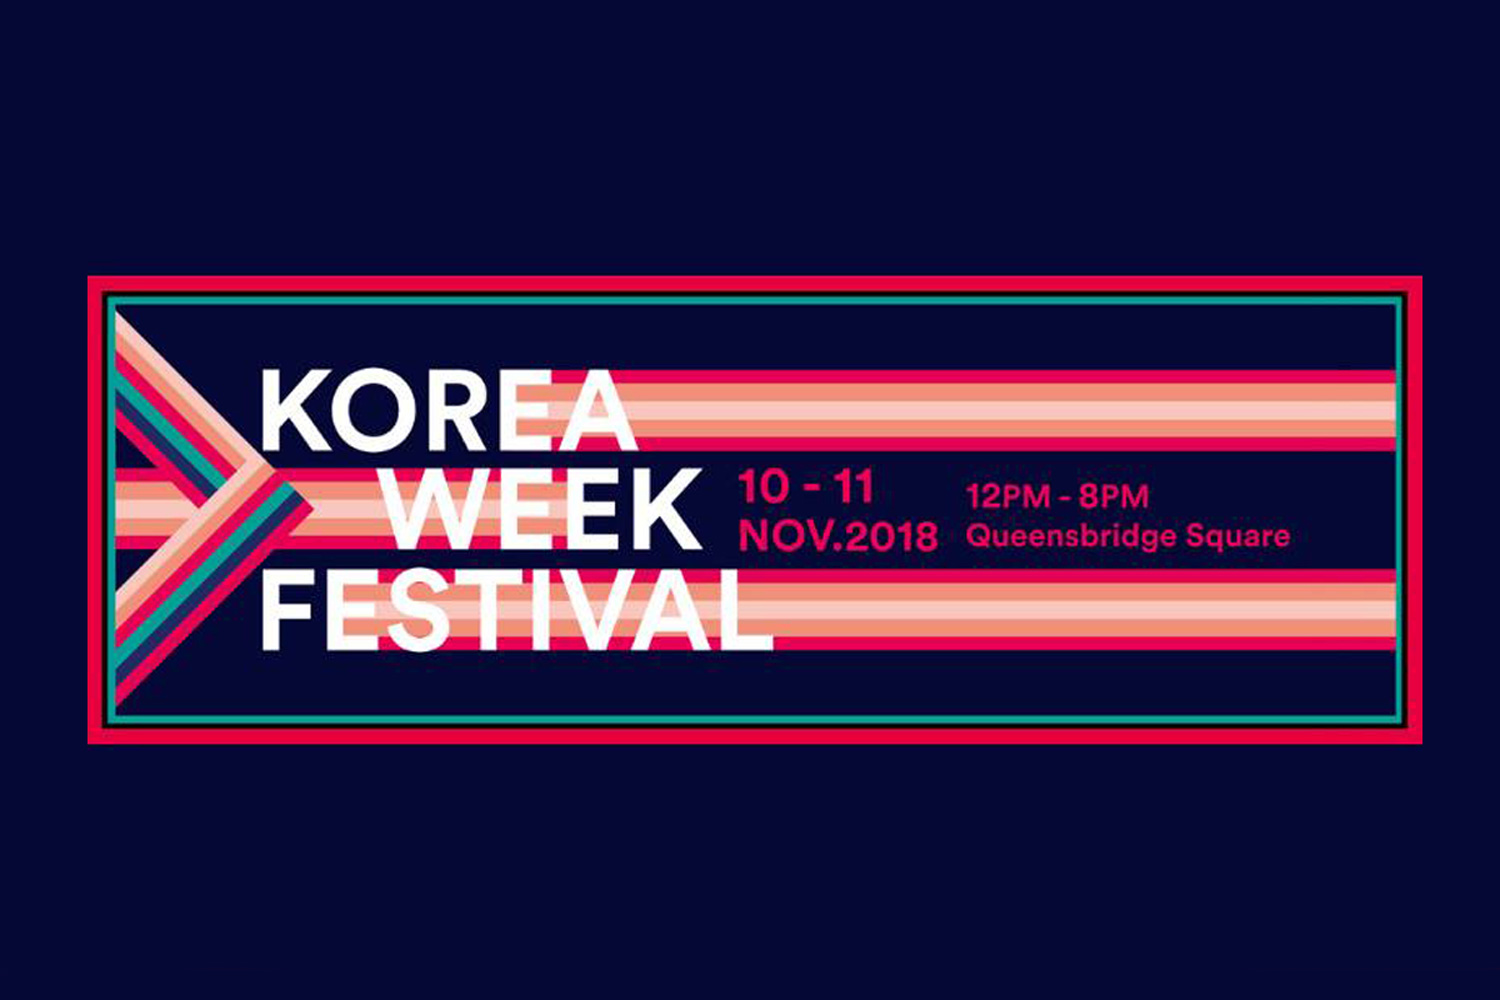 Korea Week Festival 2018